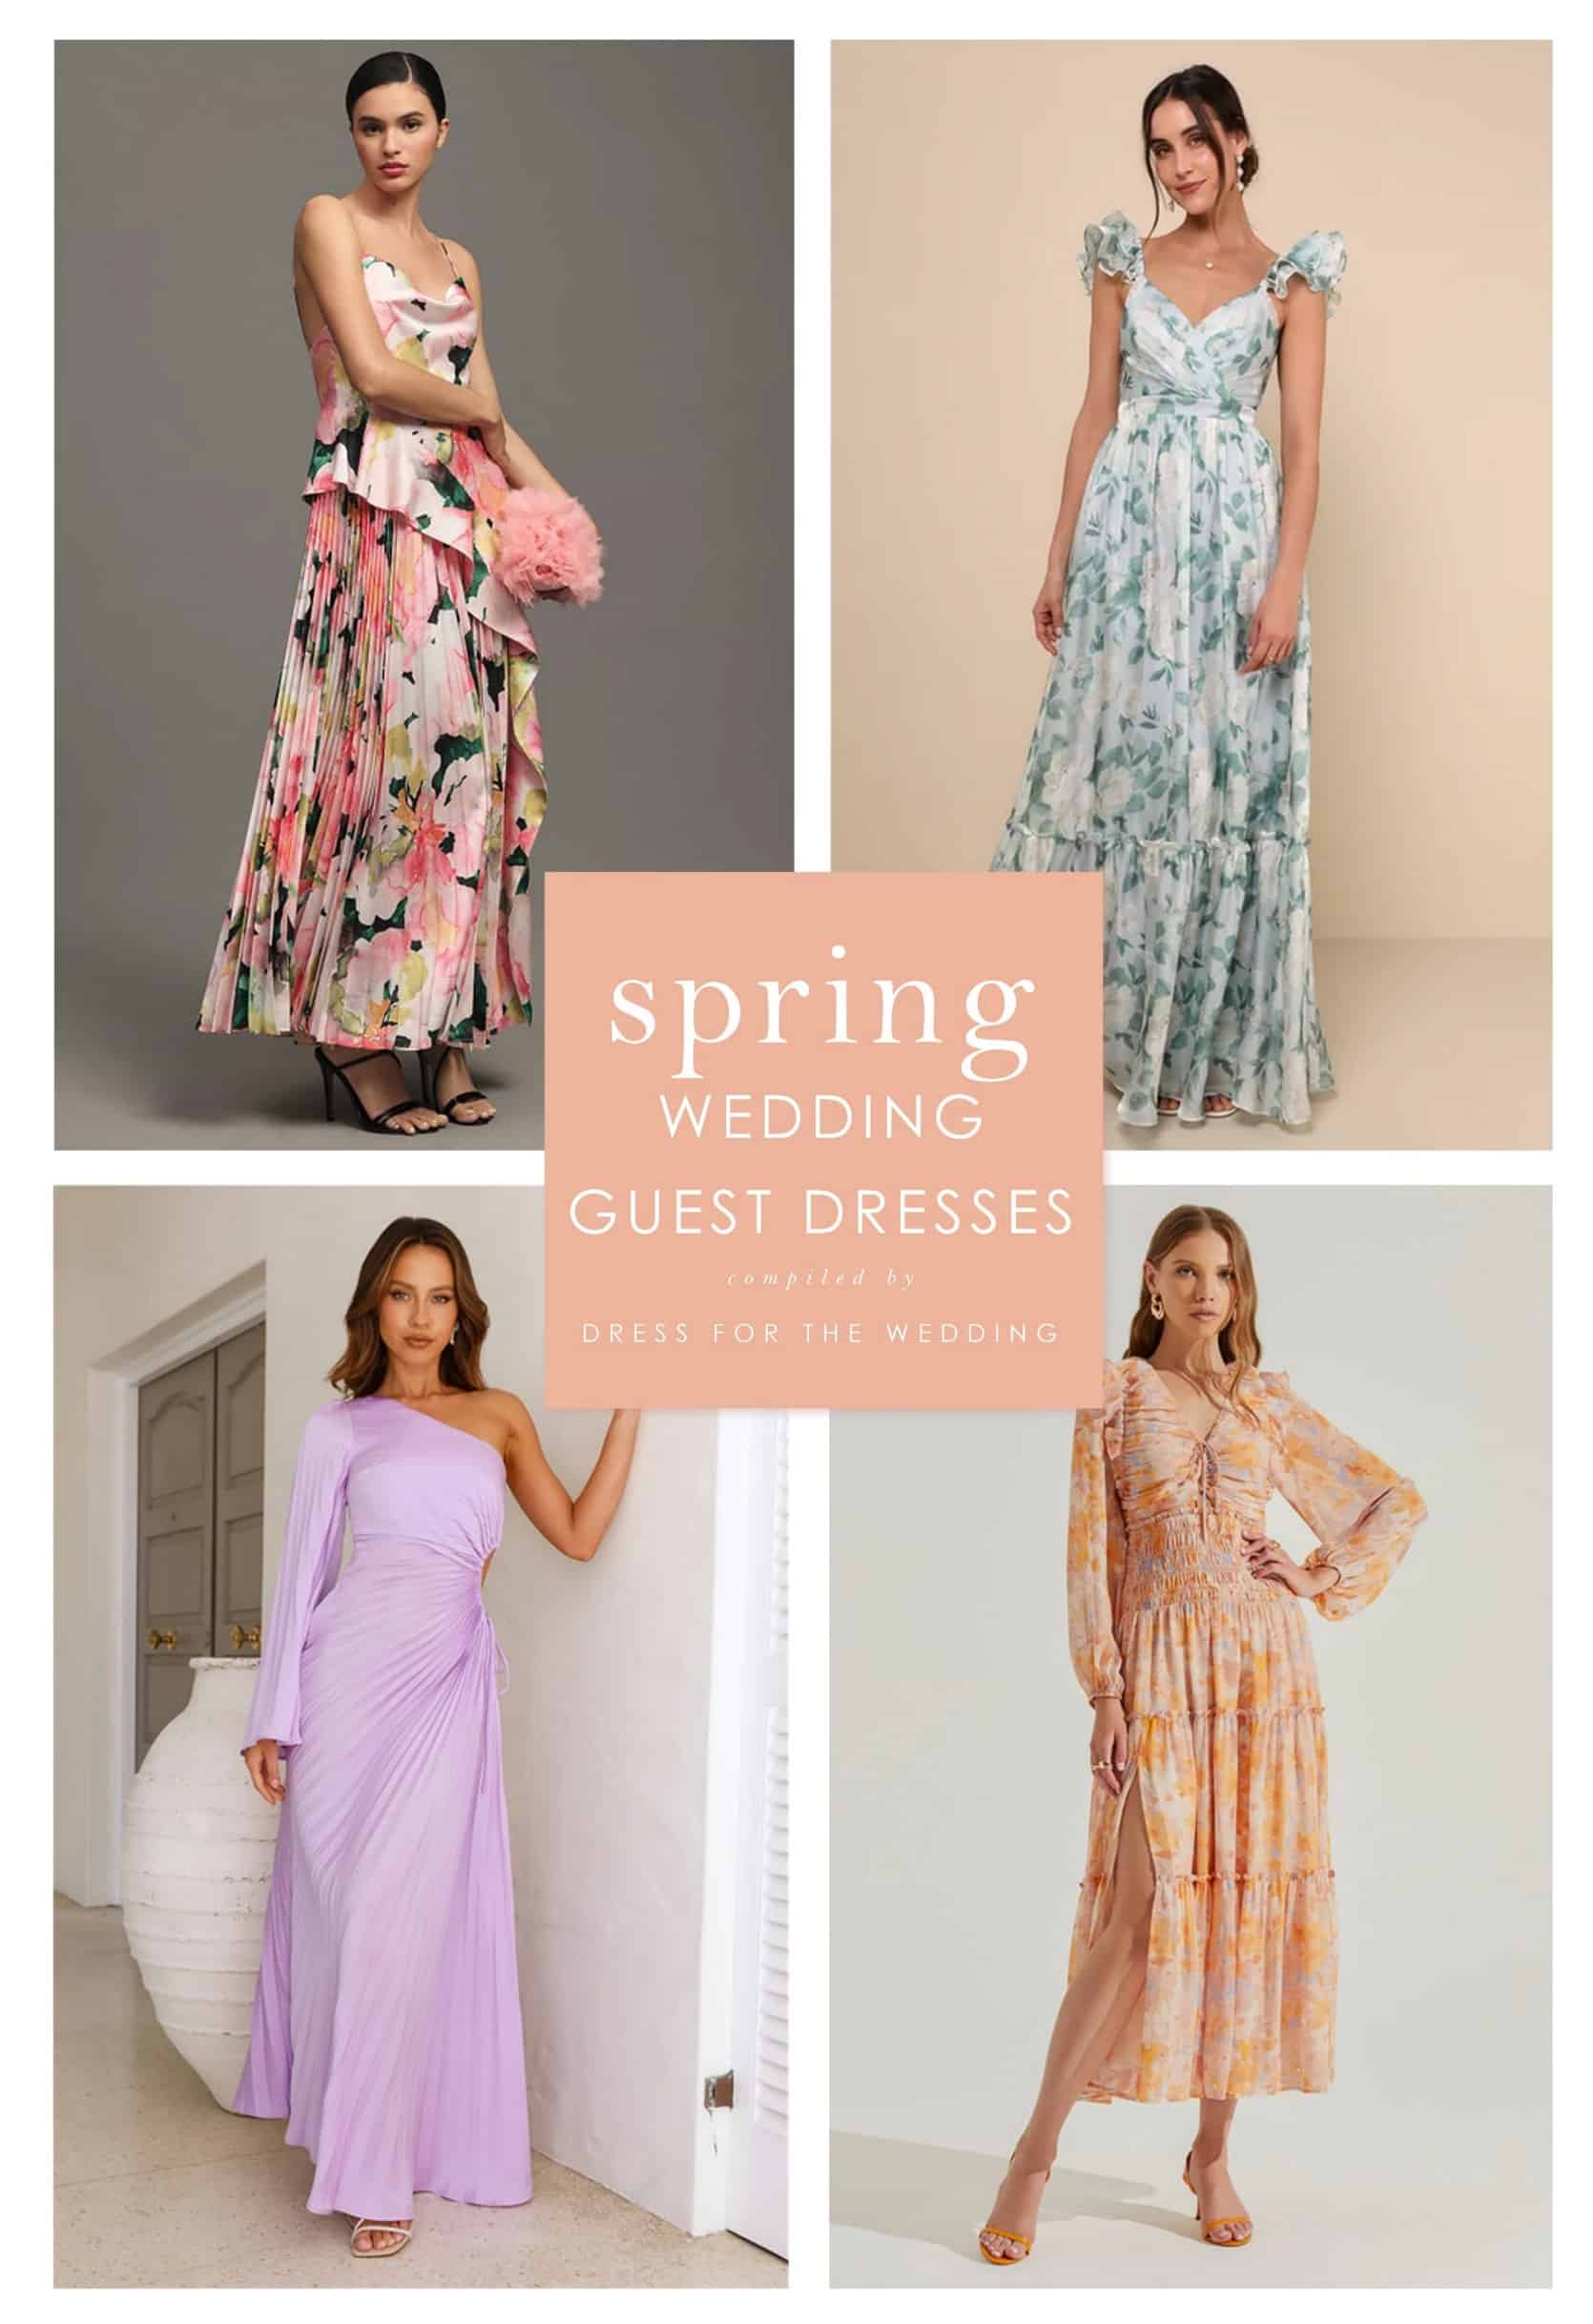 Midsize vs. Model: @lulus spring wedding guest dresses